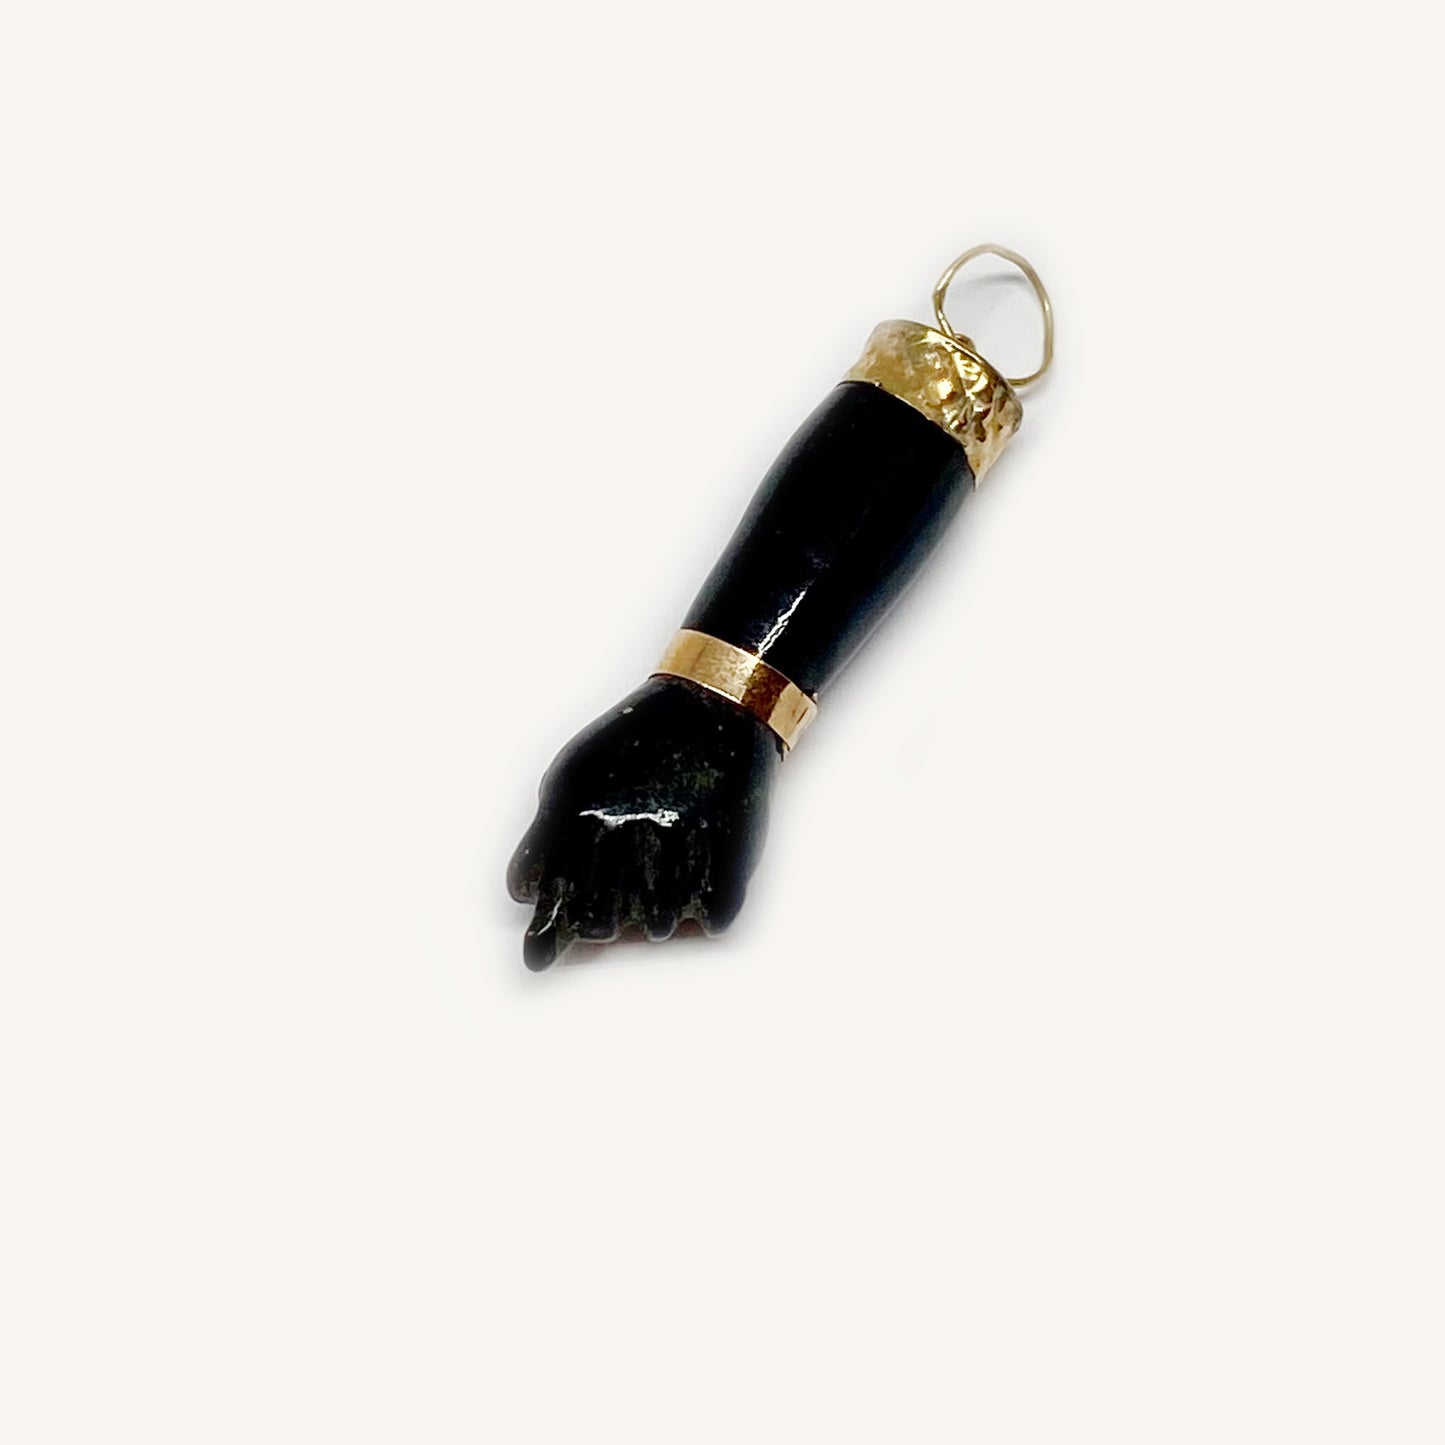 Antique 14k Gold Black Figa Hand, 1940s Black Figa Charm